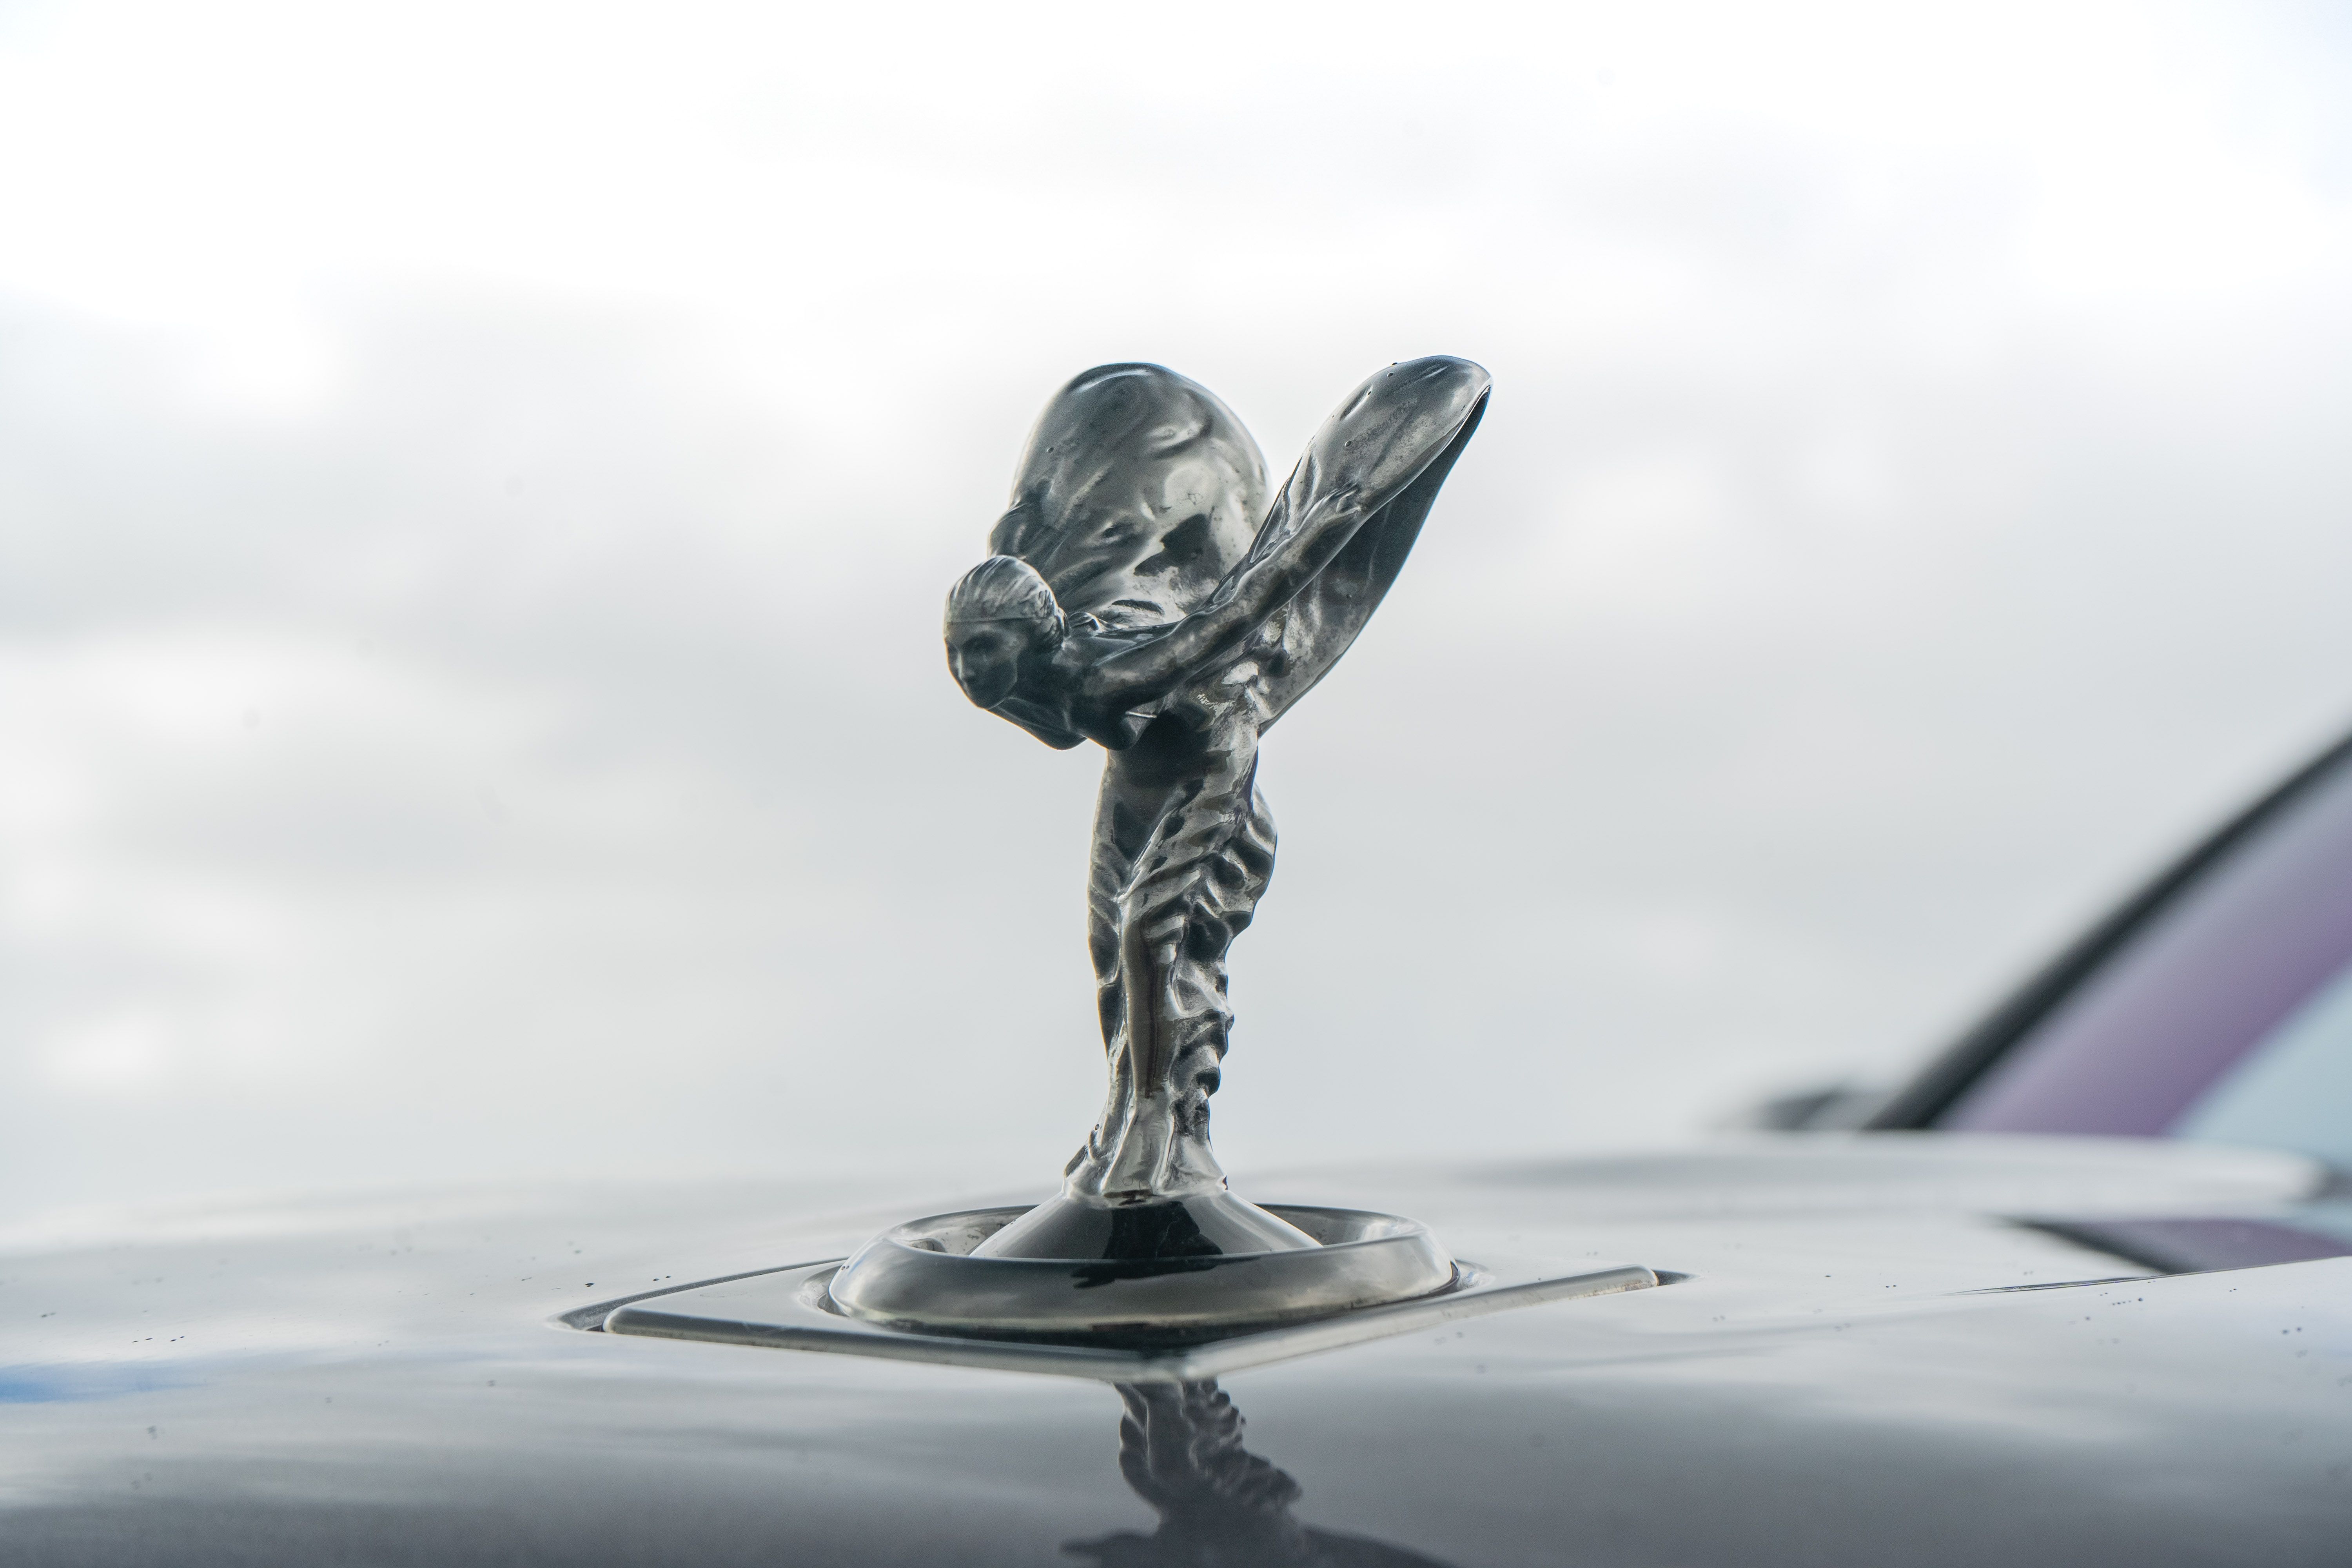 2020 Rolls-Royce Cullinan - Driven